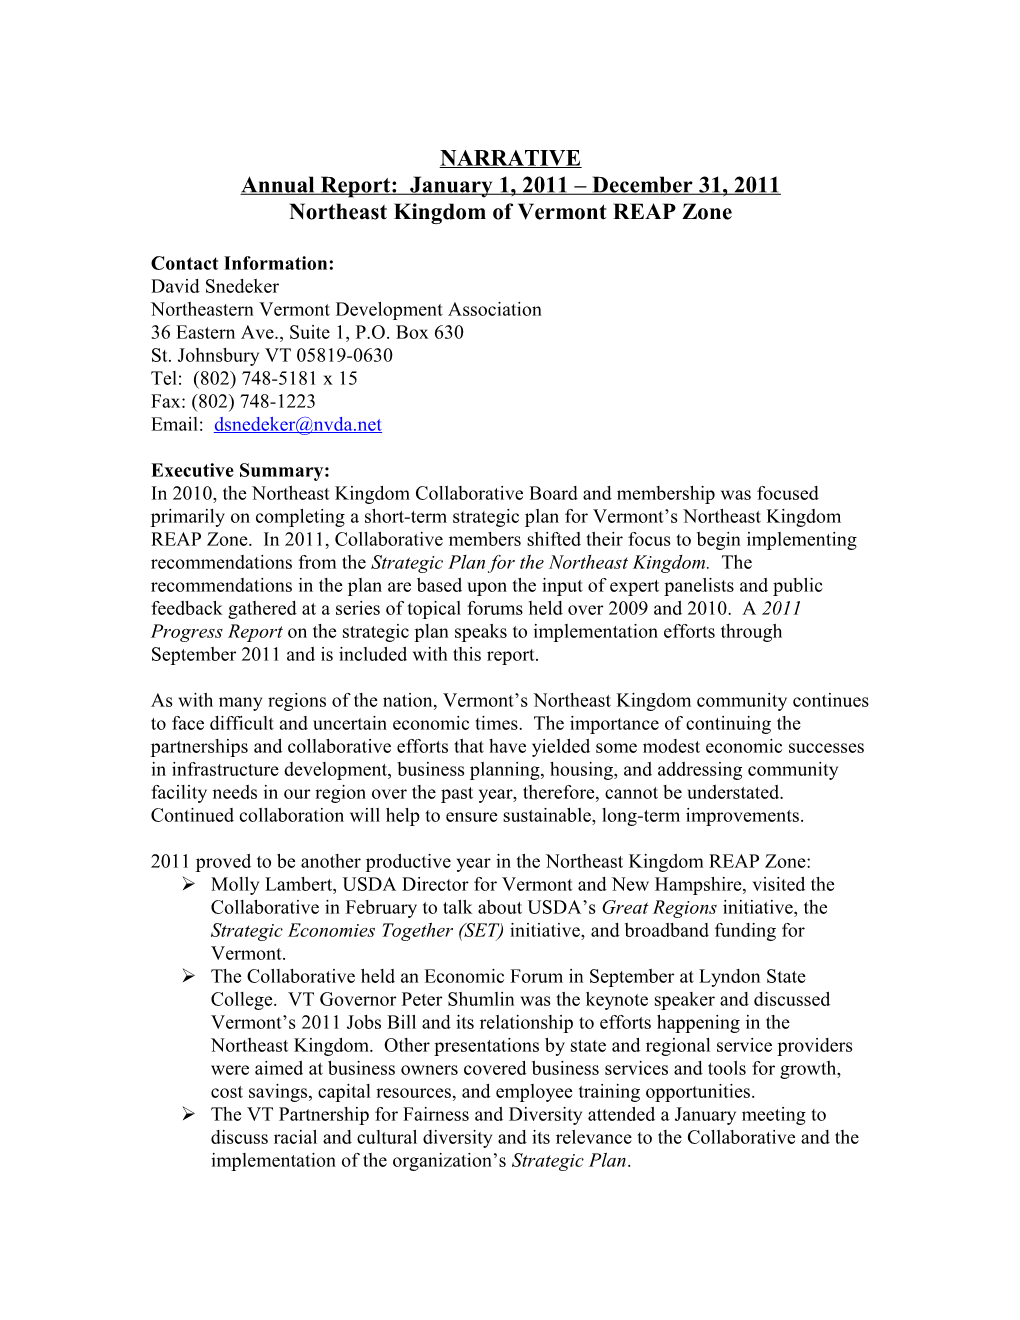 Annual Report: January 1, 2011 December 31, 2011